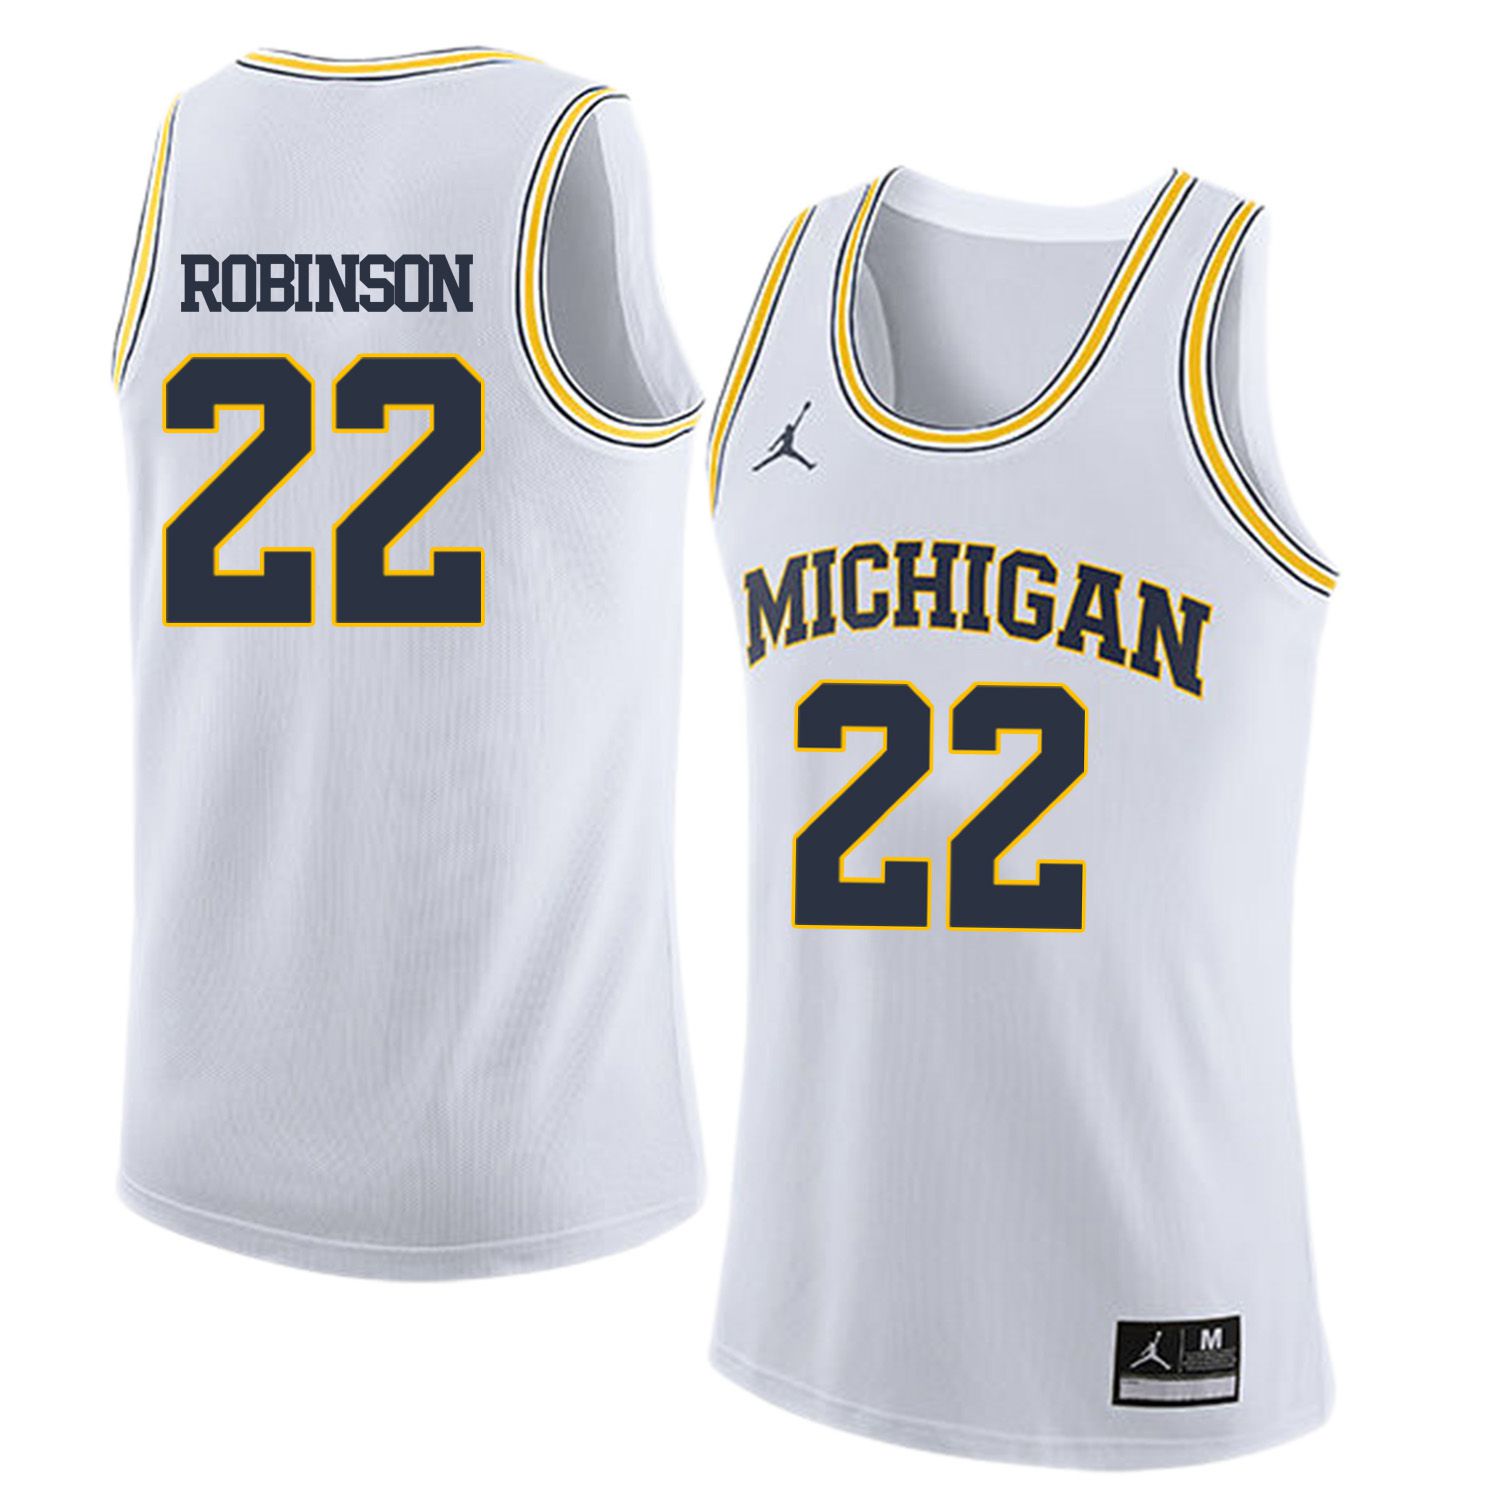 Men Jordan University of Michigan Basketball White 22 Robinson Customized NCAA Jerseys